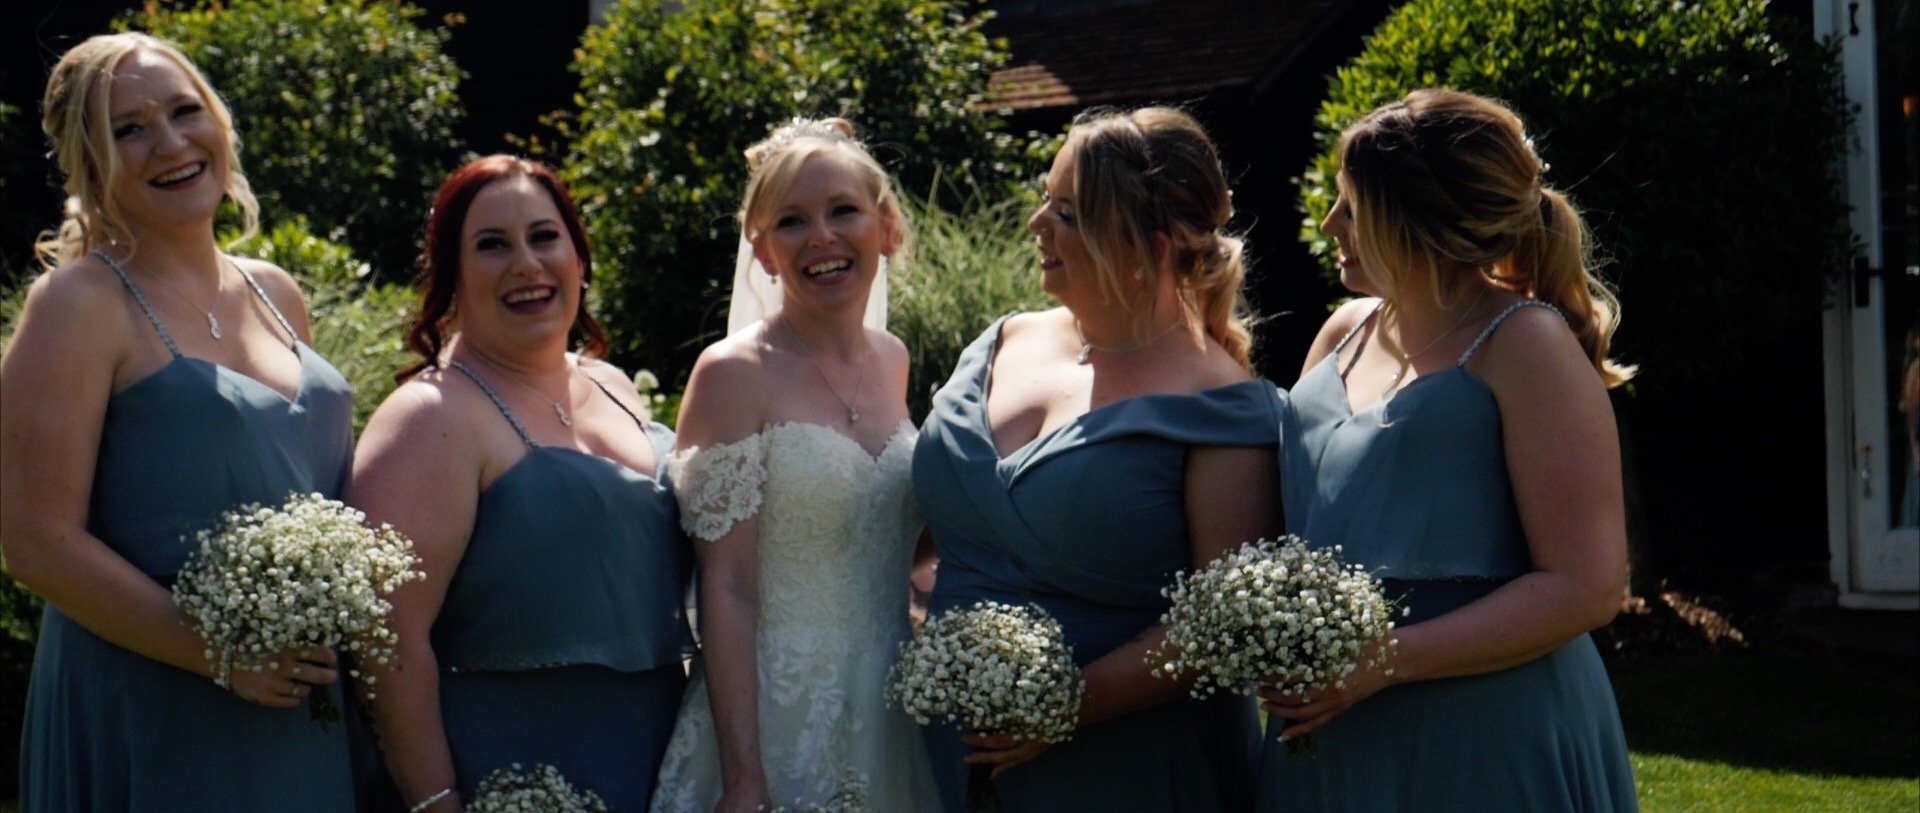 Bridal party wedding videos Essex.jpg